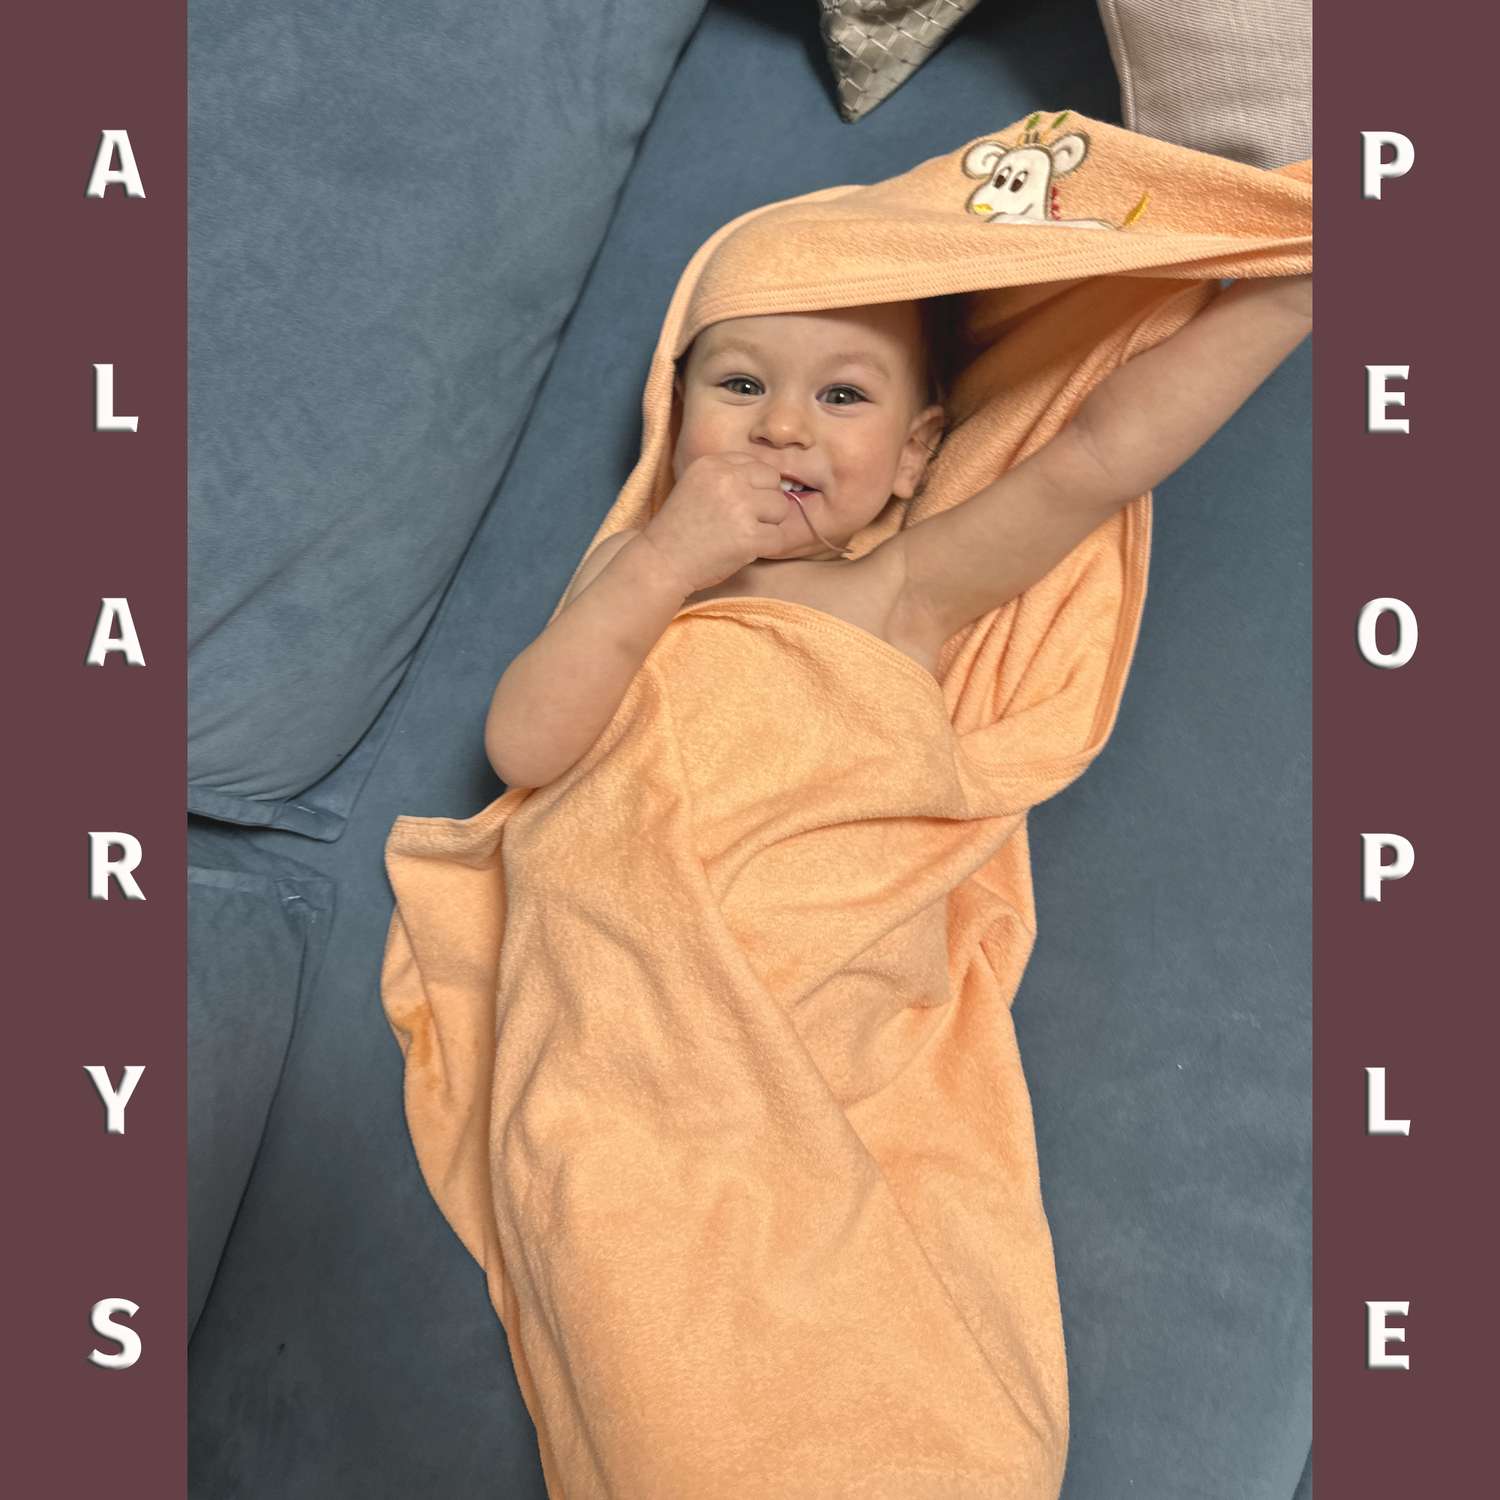 Набор для купания ALARYSPEOPLE пеленка-полотенце с уголком и рукавичка - фото 11